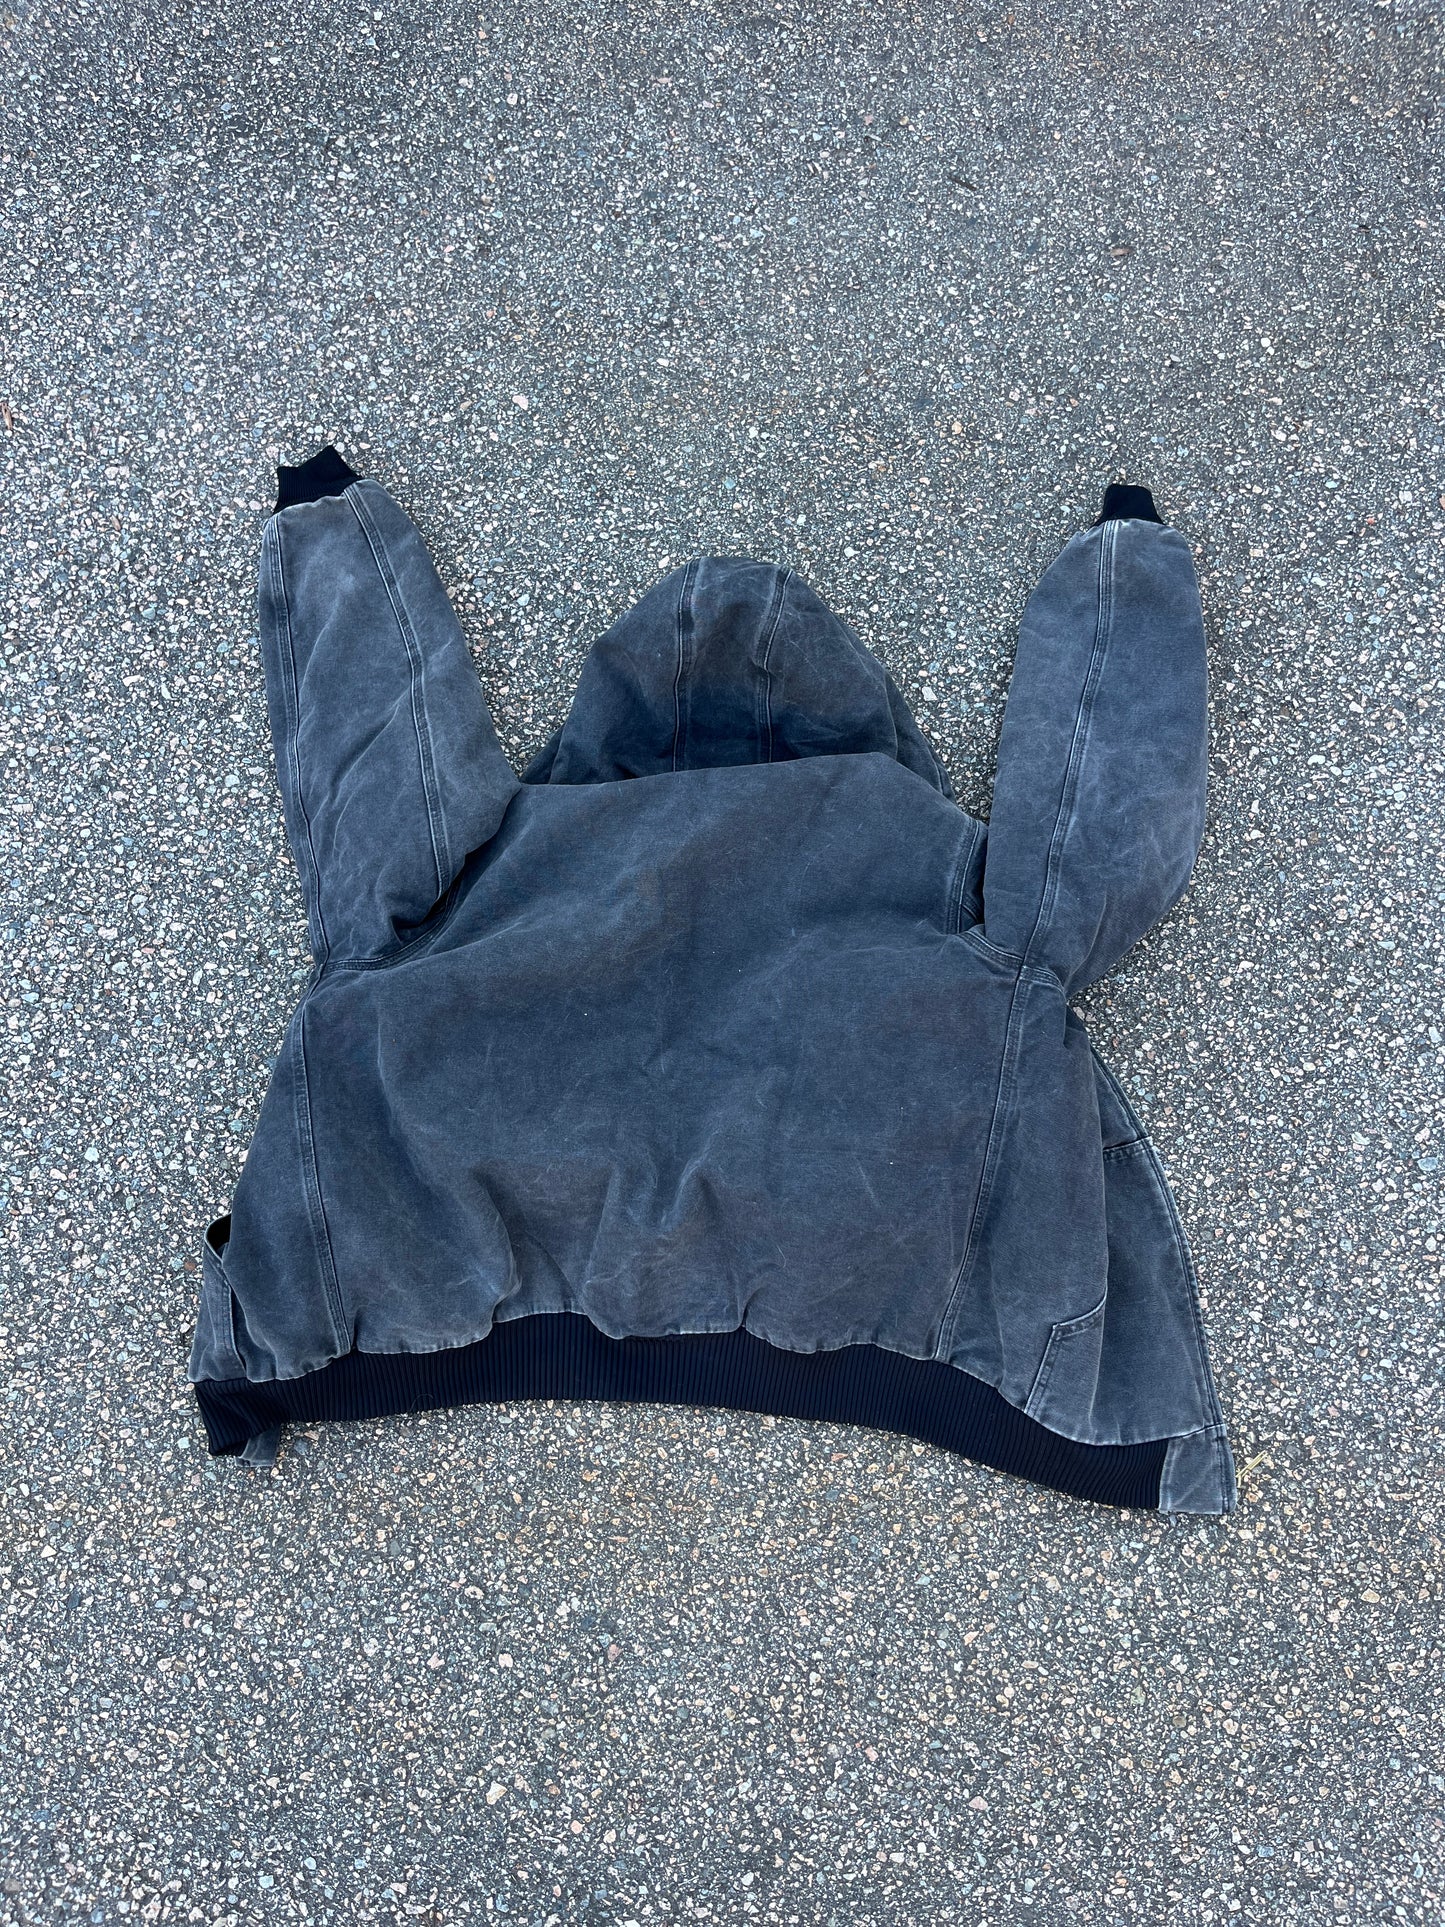 Faded Black Carhartt Active Jacket - Large Tall